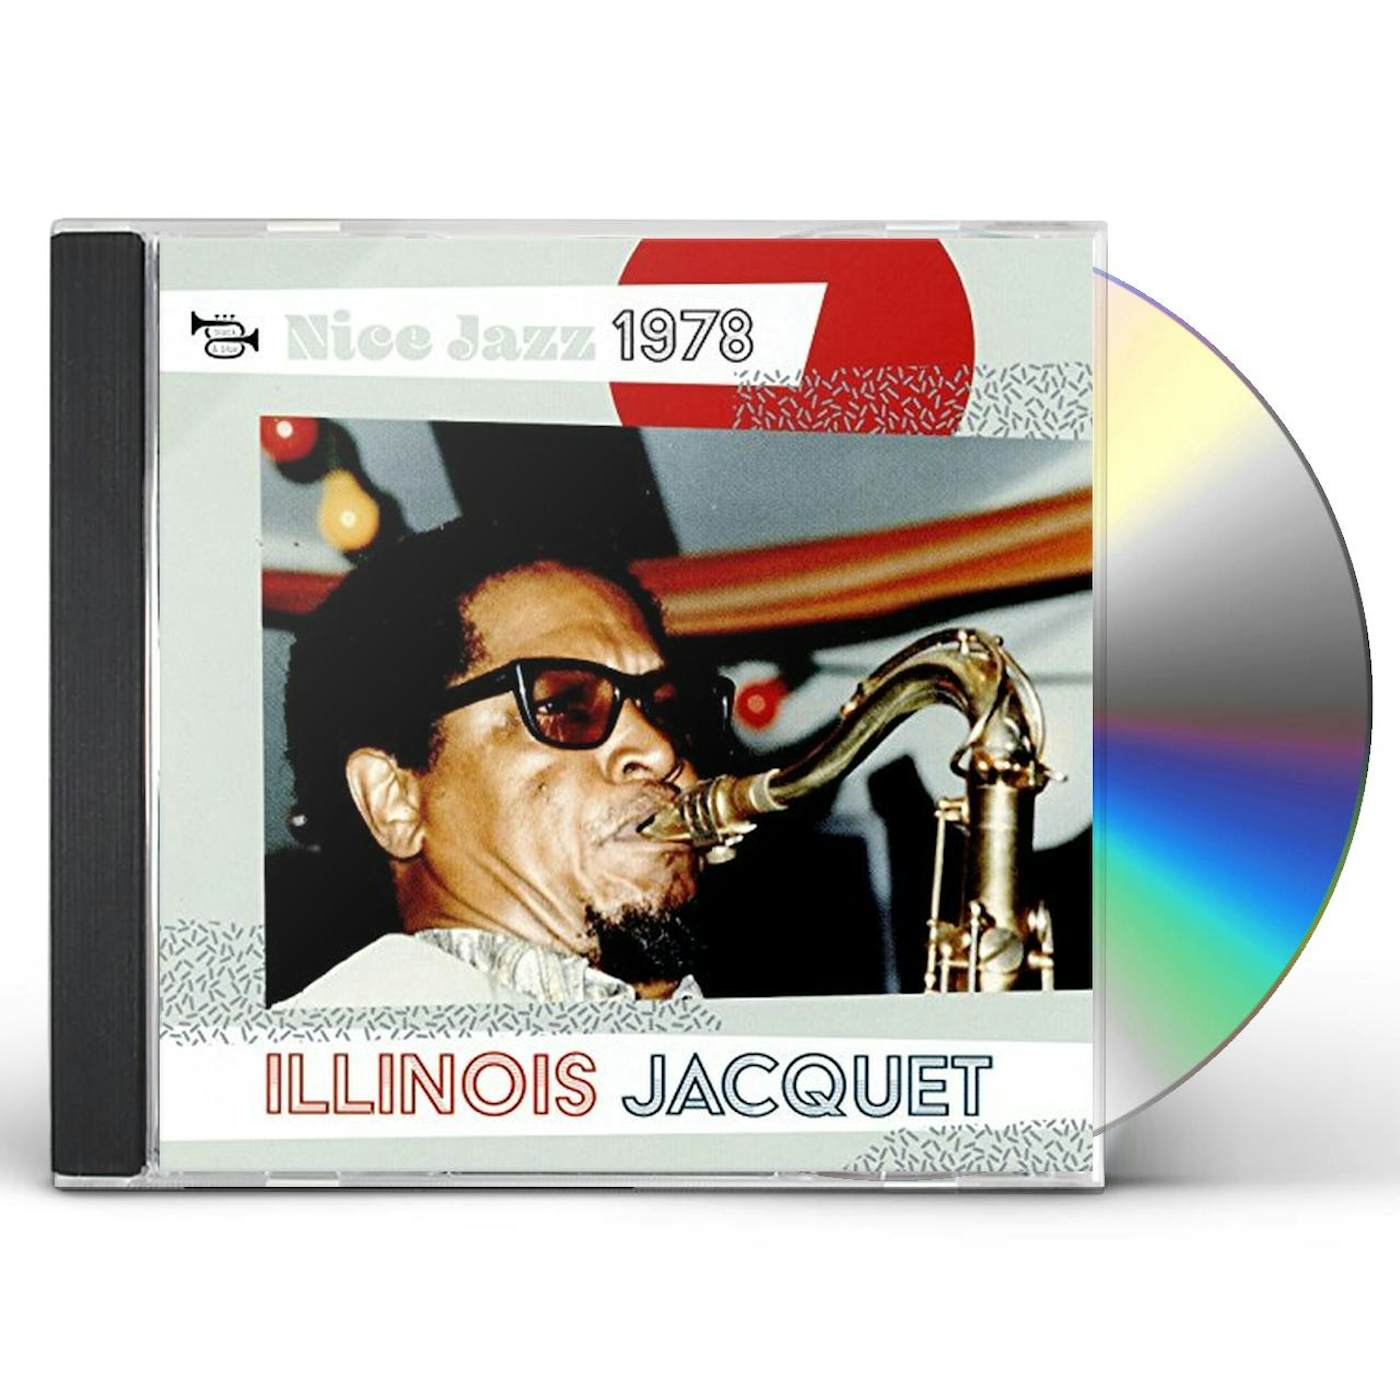 Illinois Jacquet NICE JAZZ 1978 CD